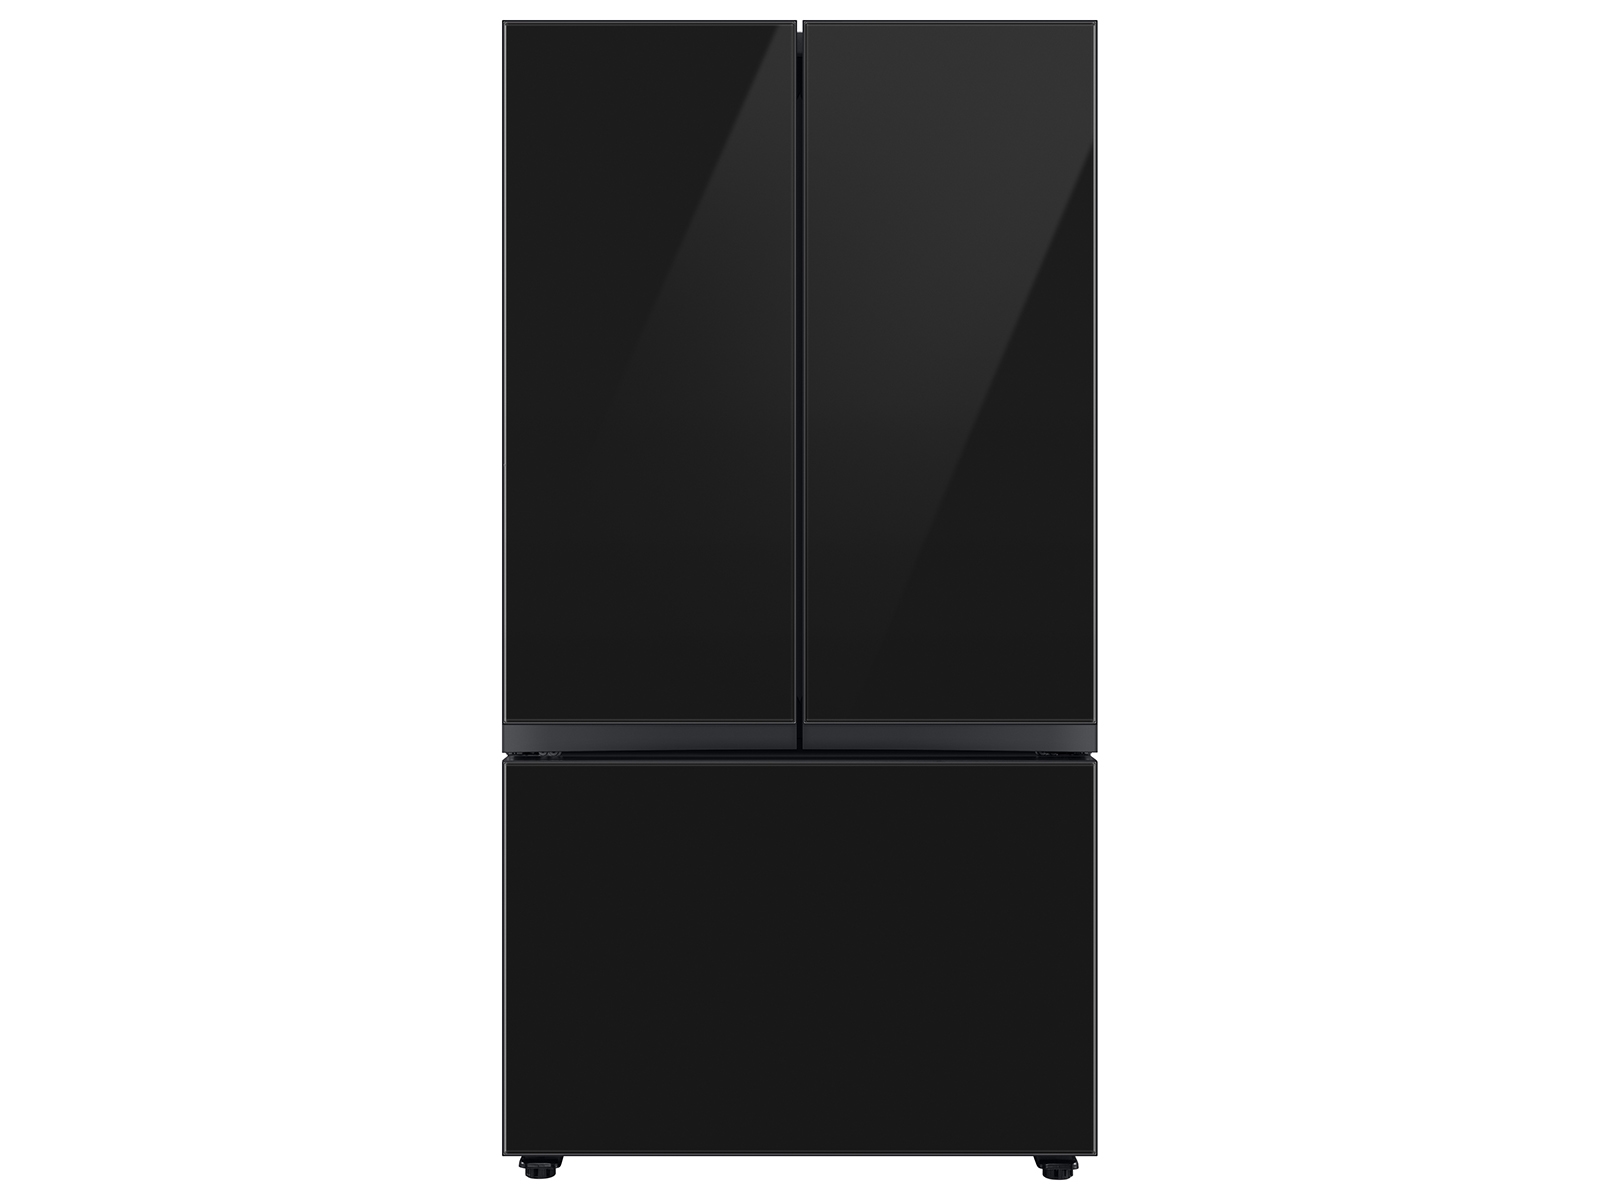 Samsung Bespoke 3-Door French Door Refrigerator in Stainless Steel (30 cu. ft.) with Beverage Center™ in Charcoal Glass(BNDL-1650309670294)